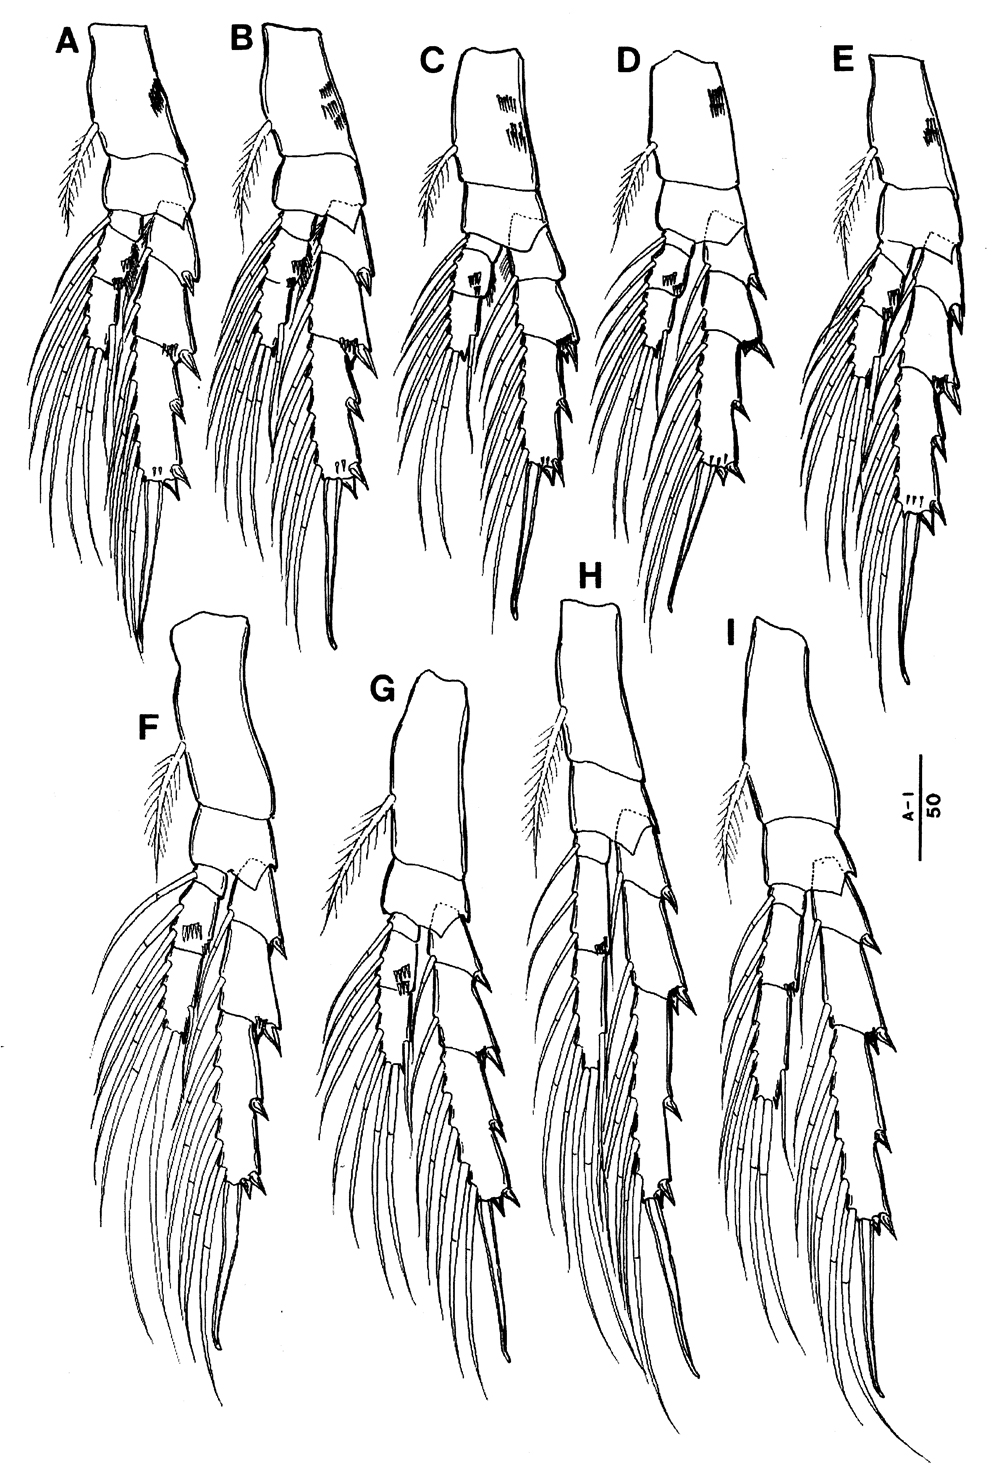 Species Bestiolina coreana - Plate 6 of morphological figures